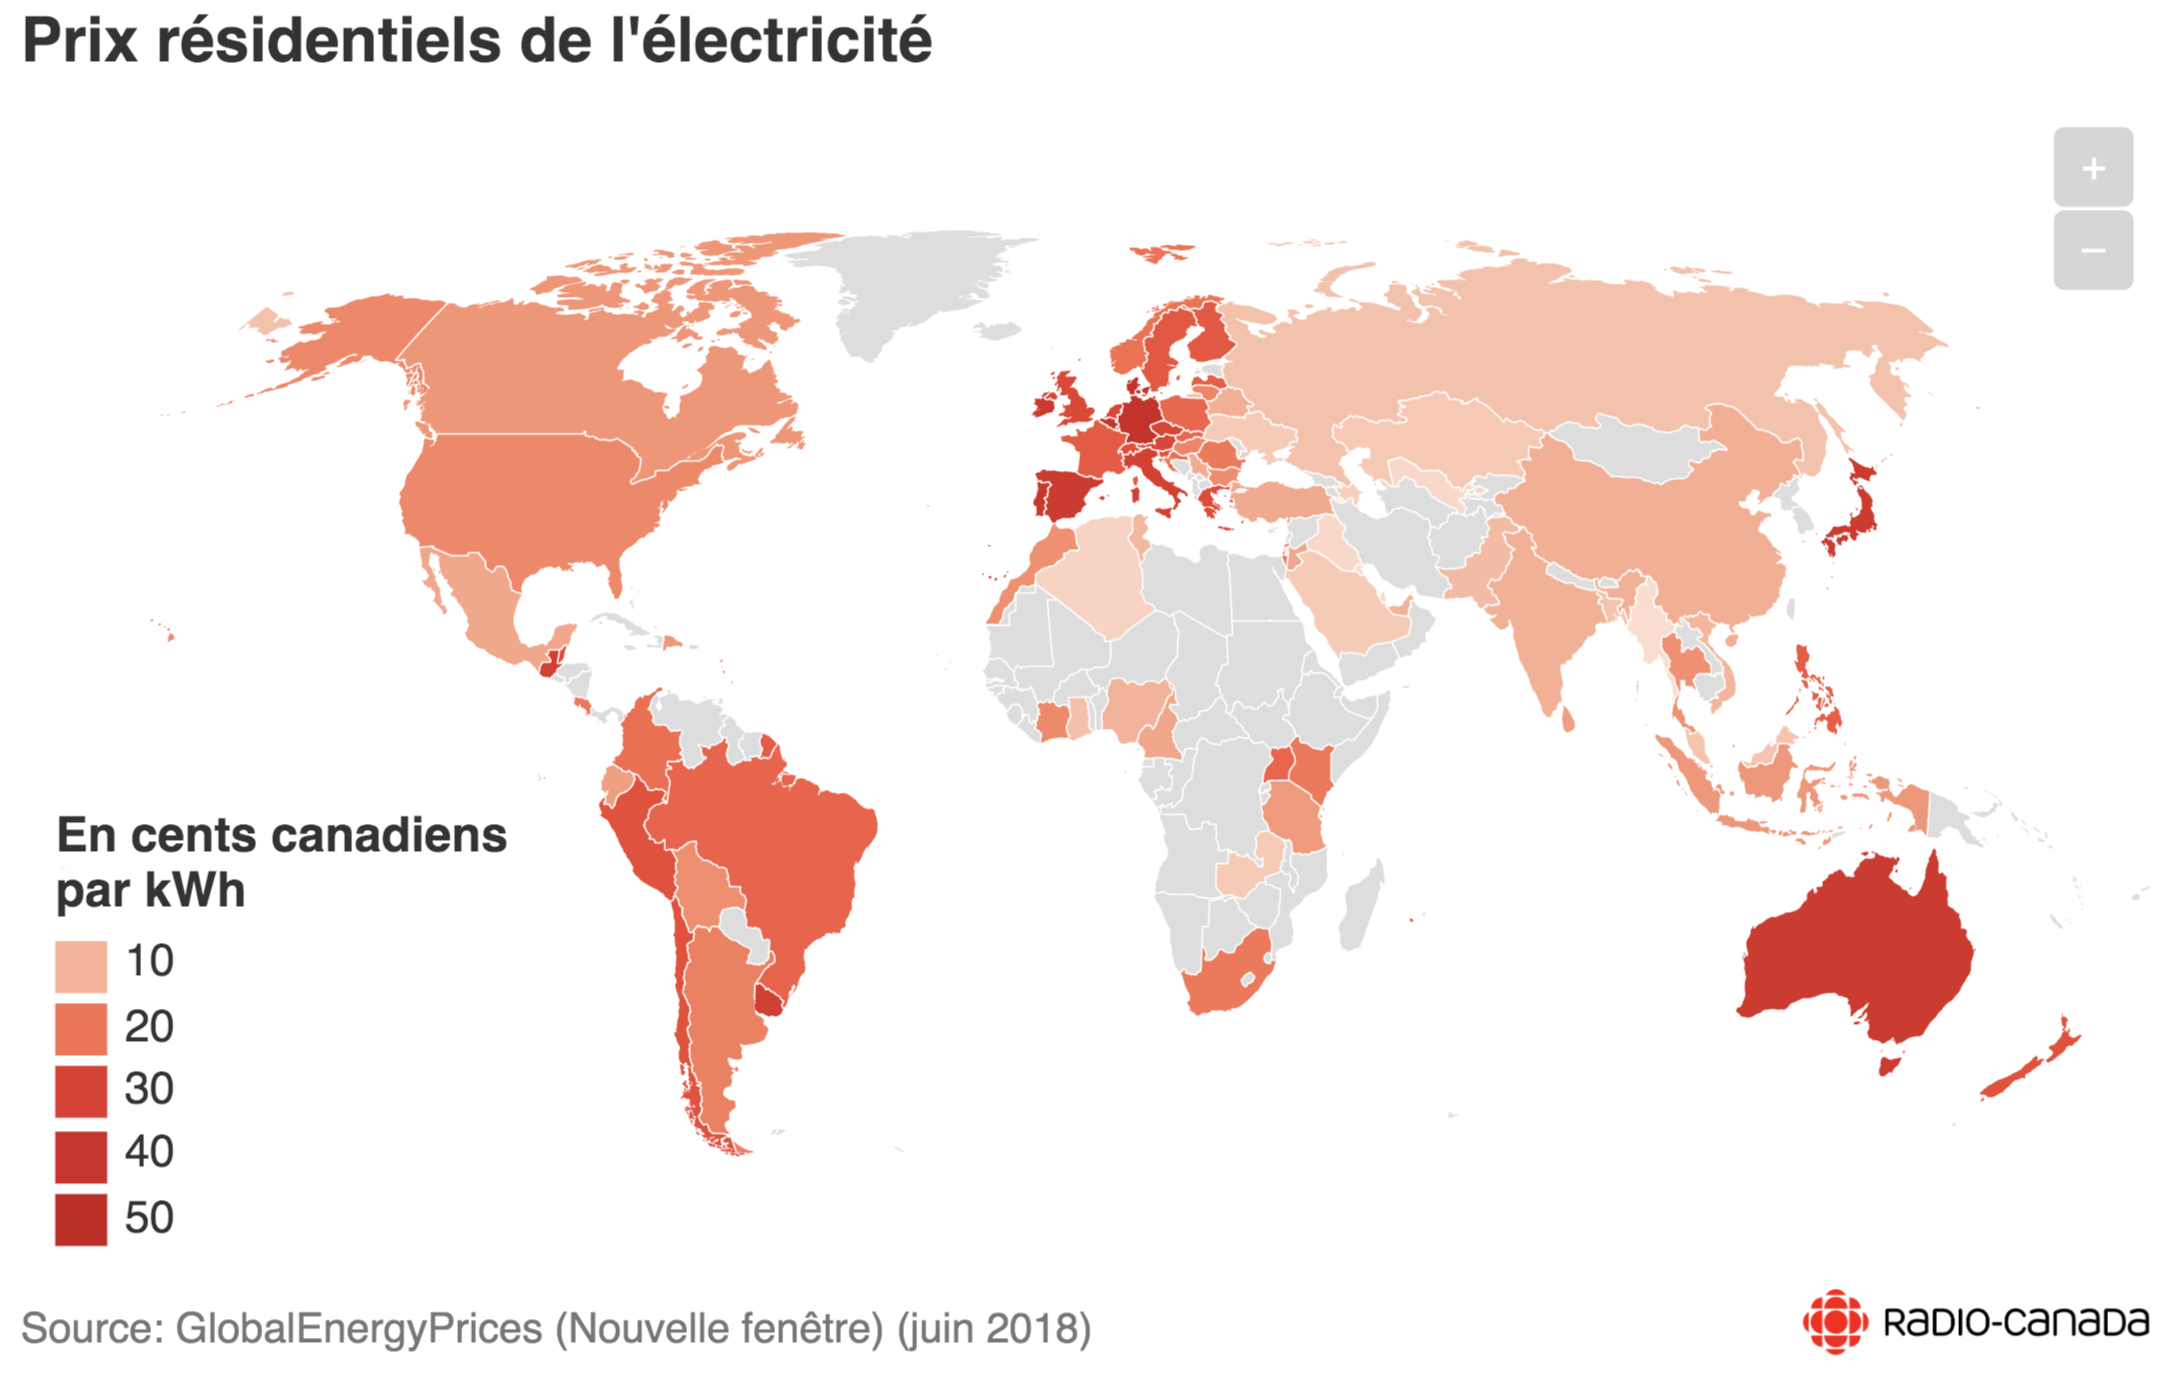 World Electricity Price 2018 